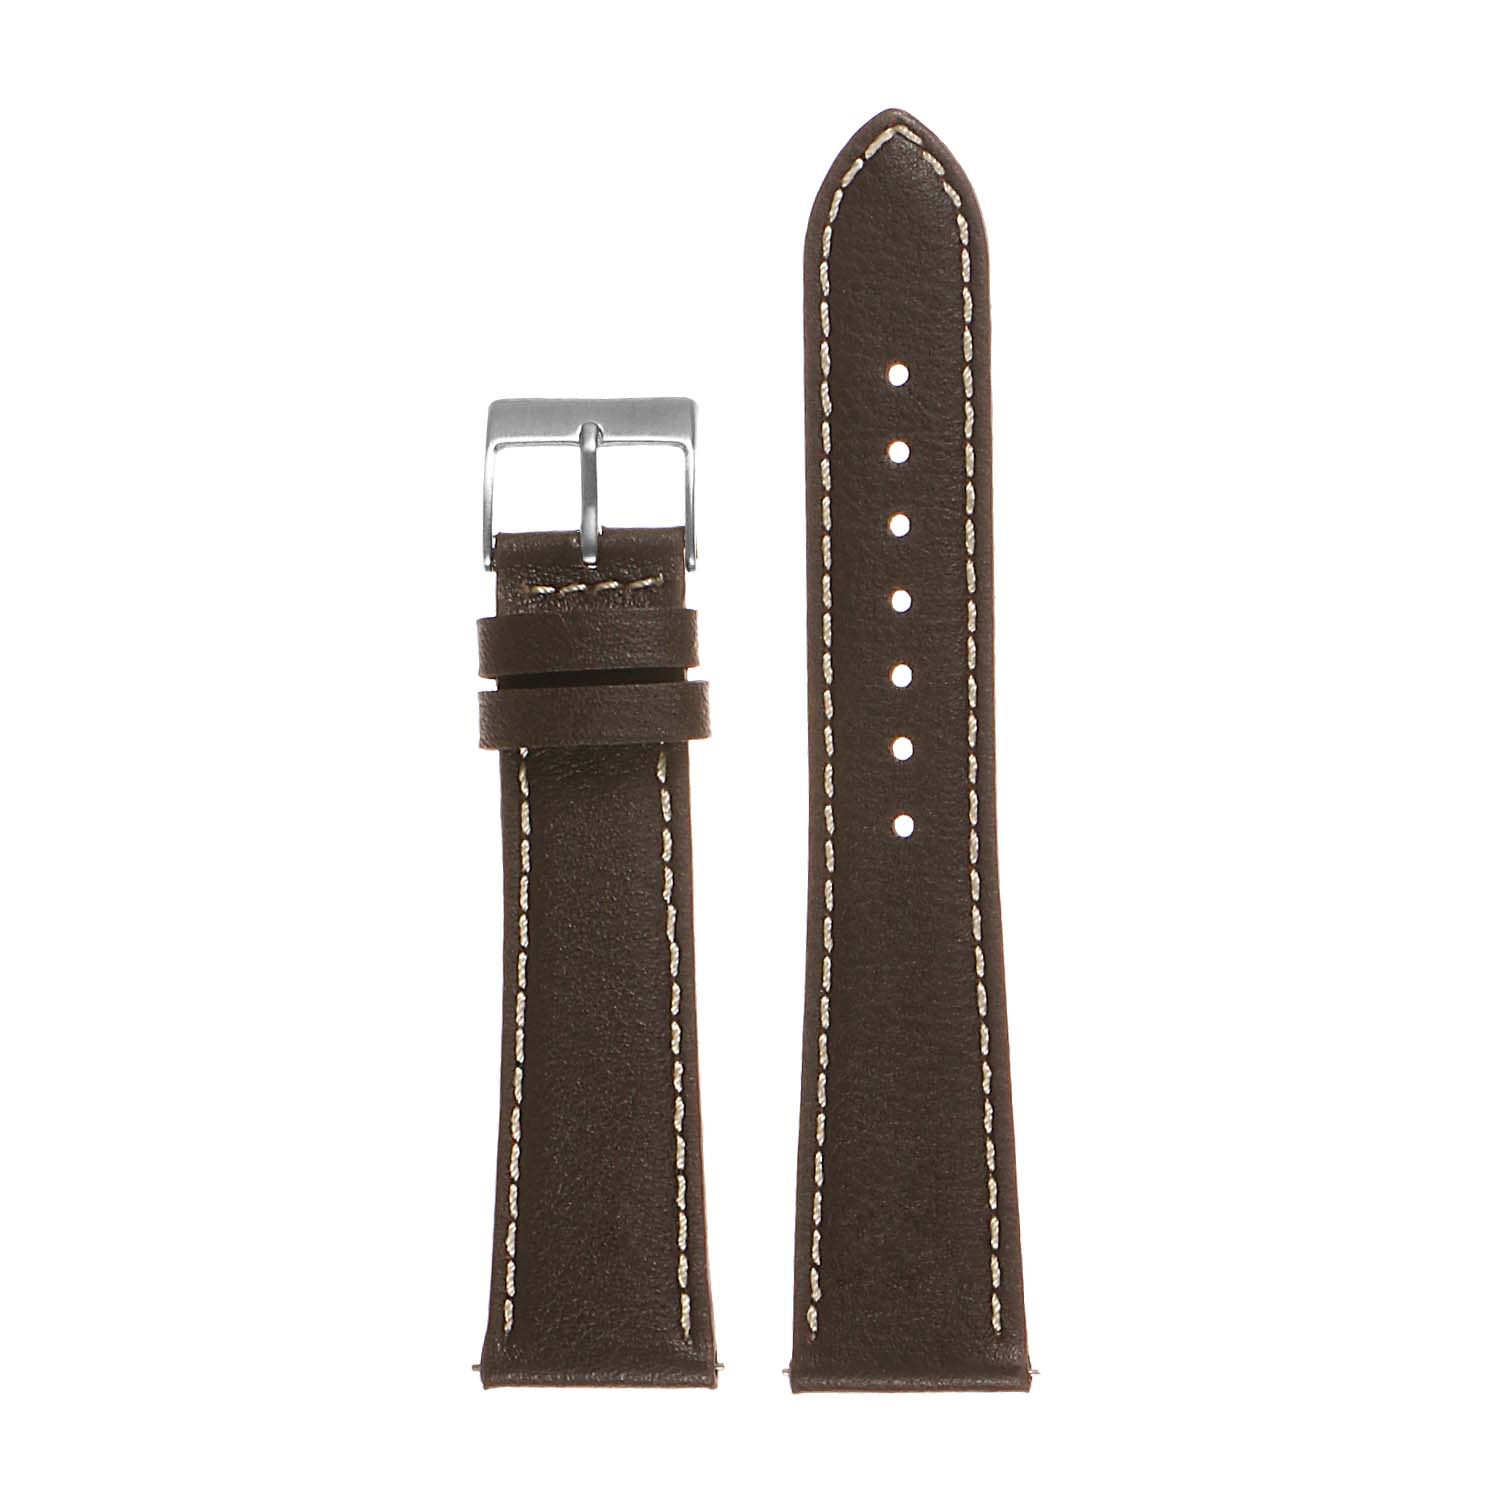  Sidart Luxury Soft Designer Leather Band Compatible